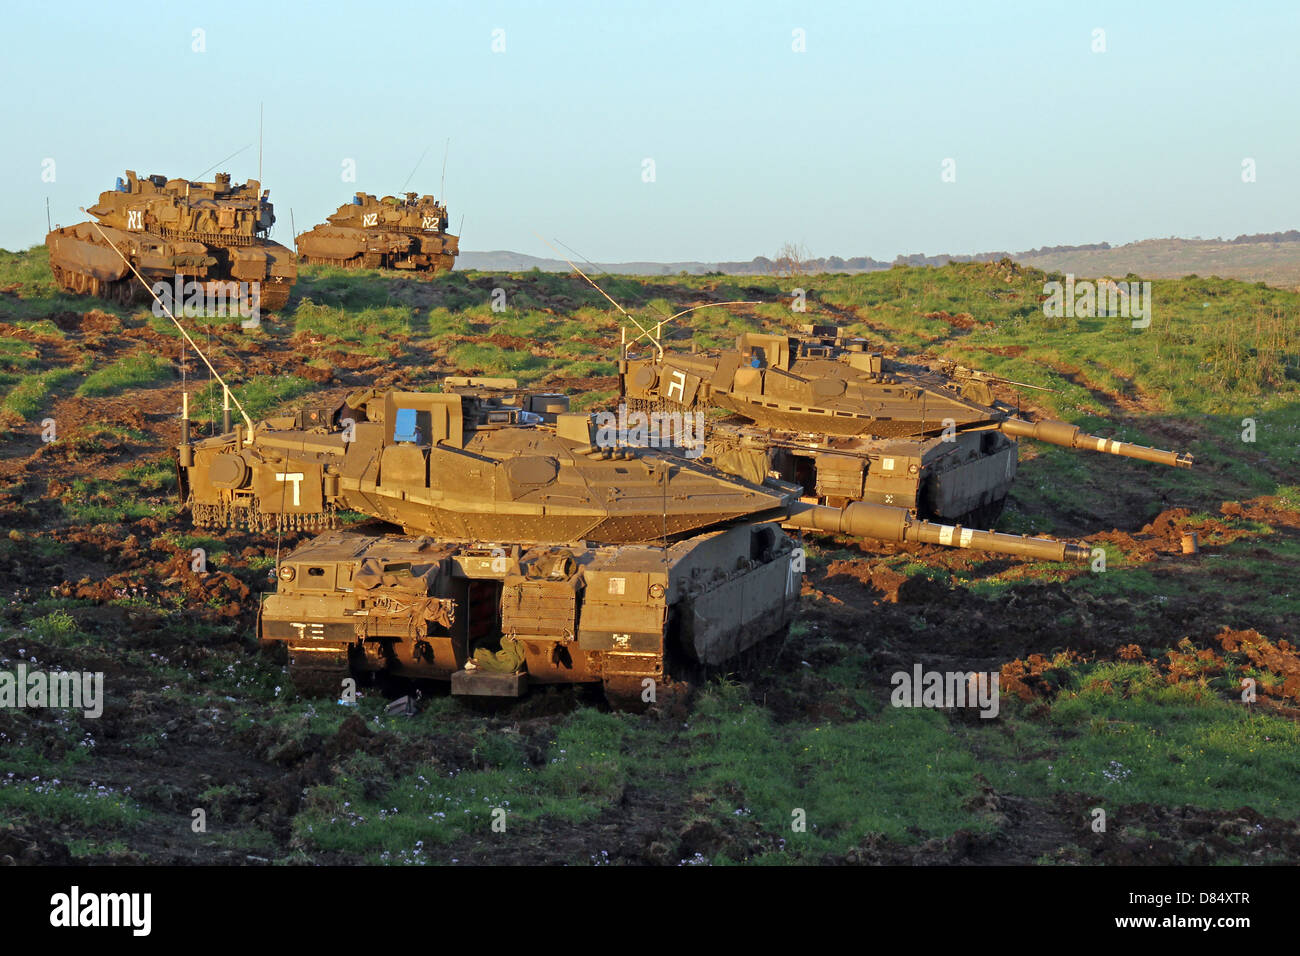 Israel Defense Force Merkava Mark IV main battle tanks during an exercise in the Golan Heights. Stock Photo